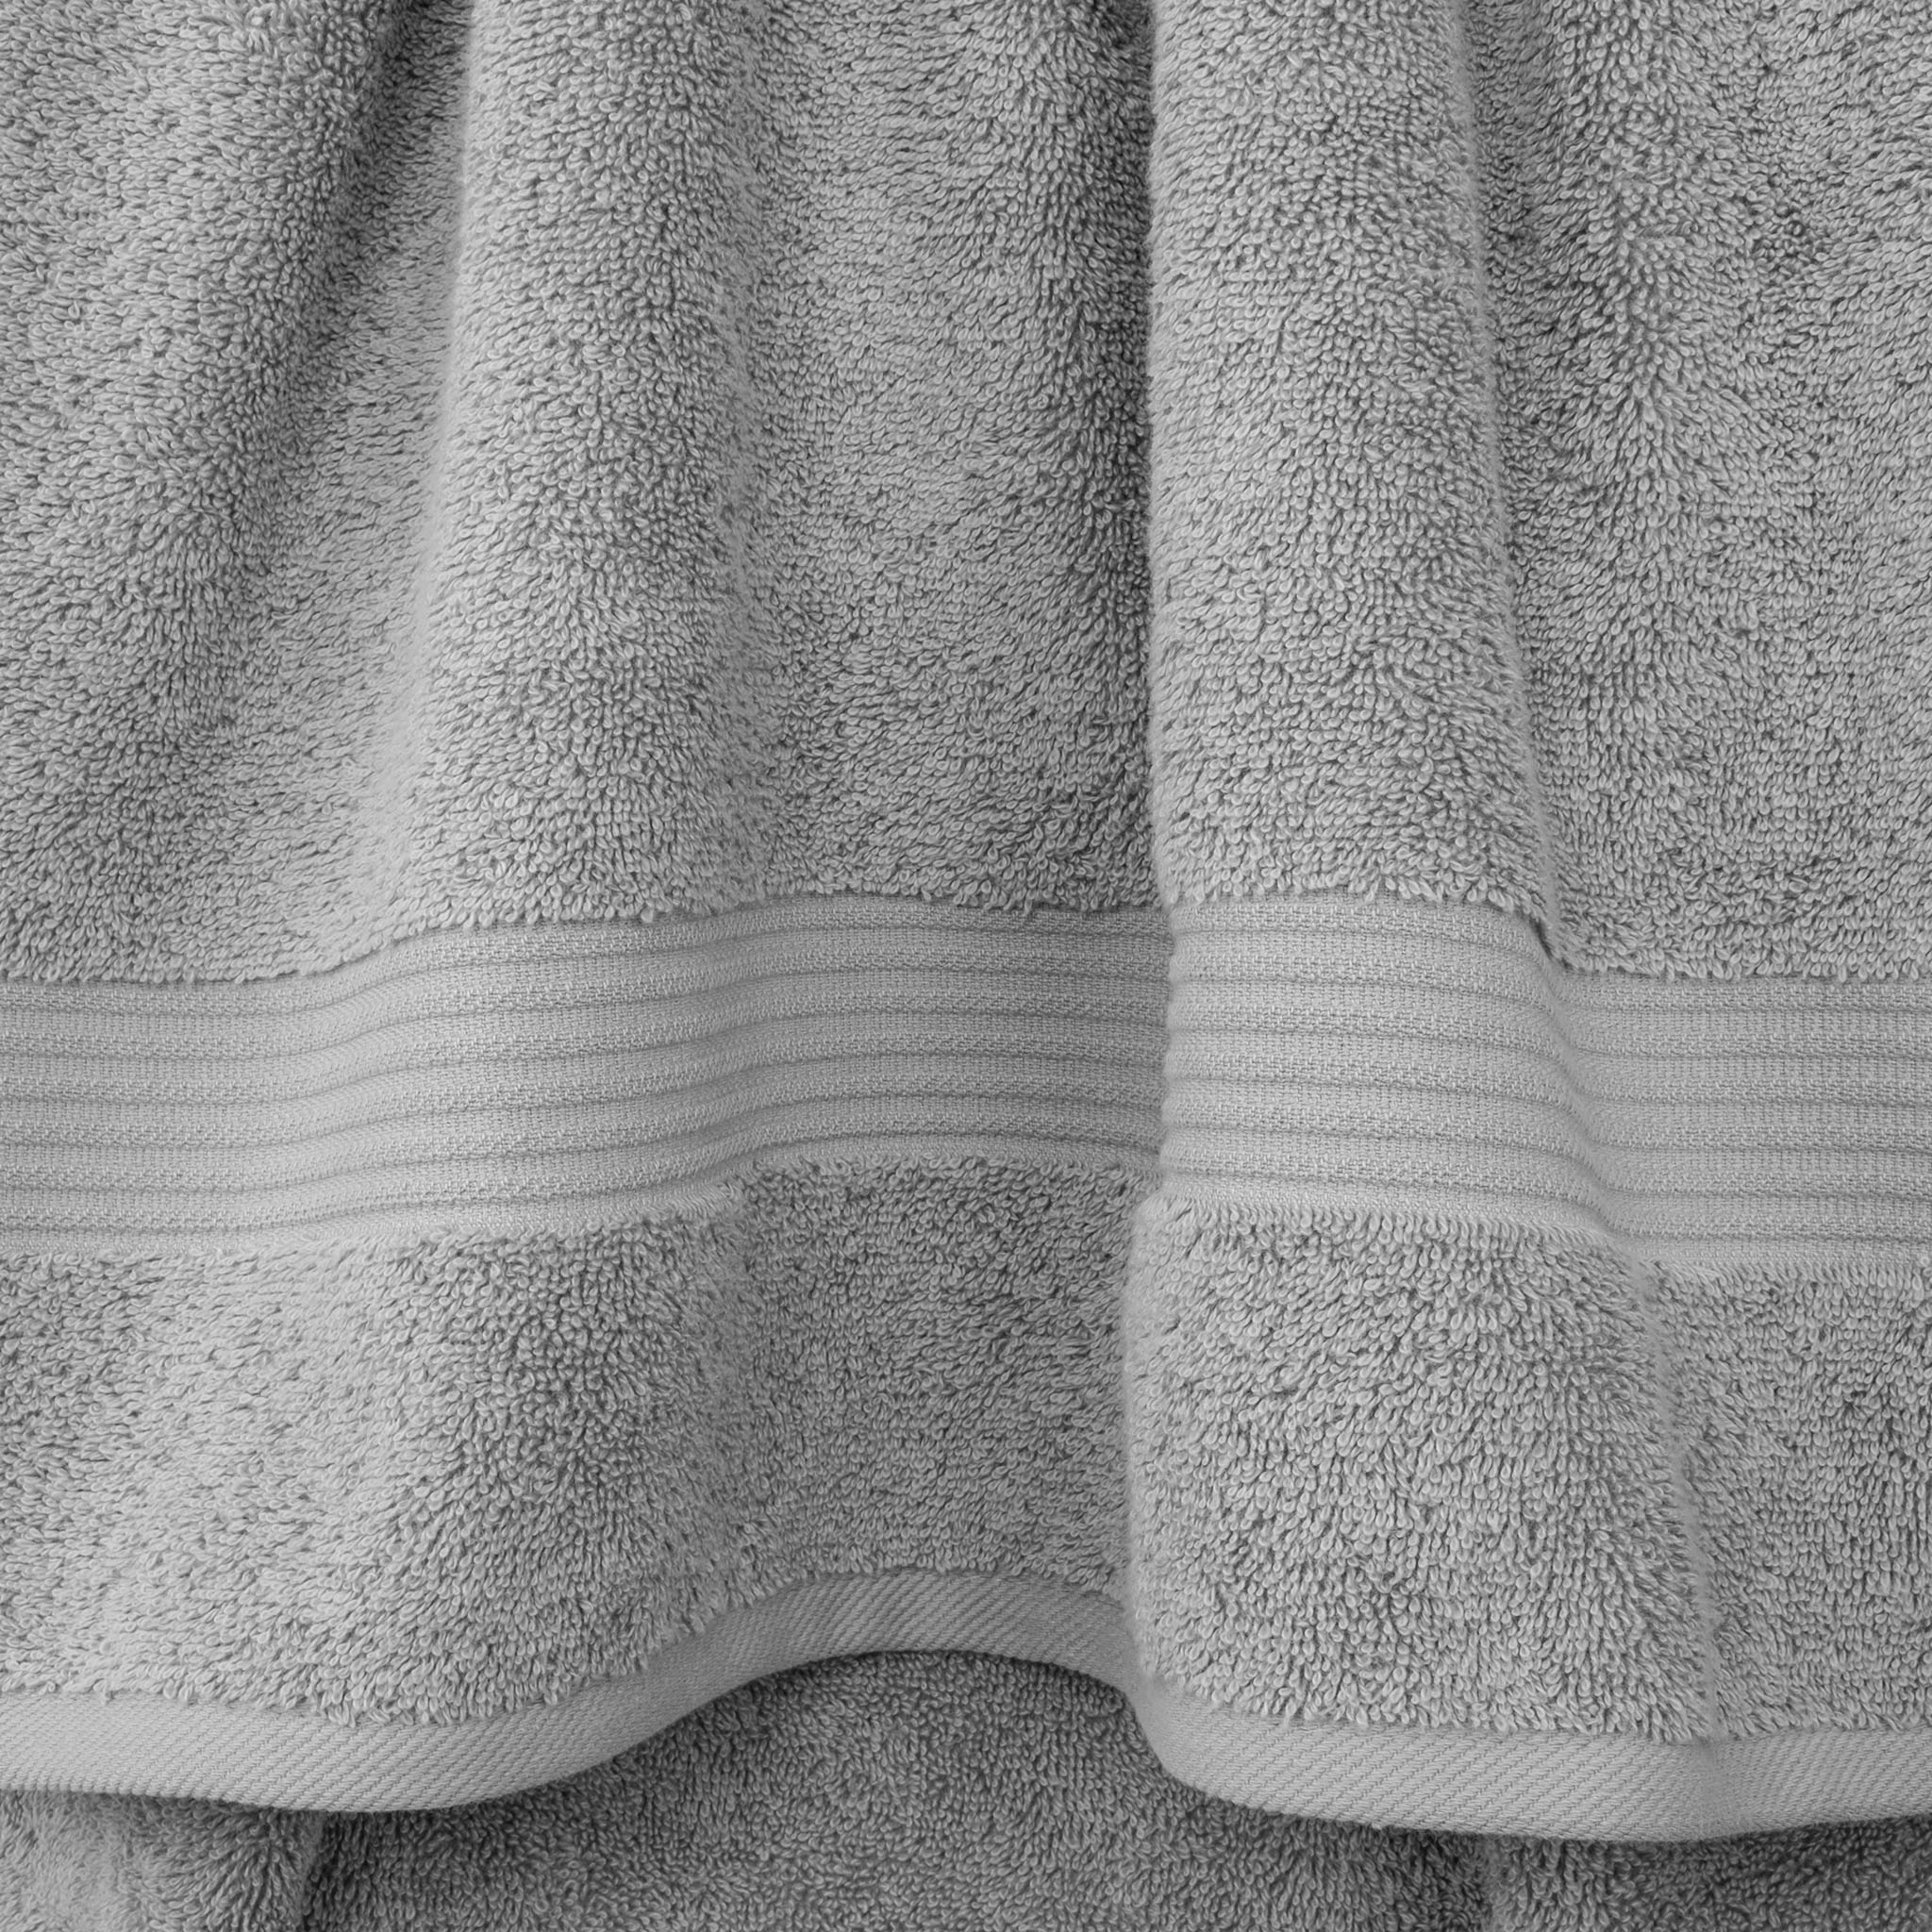 American Soft Linen Bekos 100% Cotton Turkish Towels, 4 Piece Bath Towel Set -rockridge-gray-03